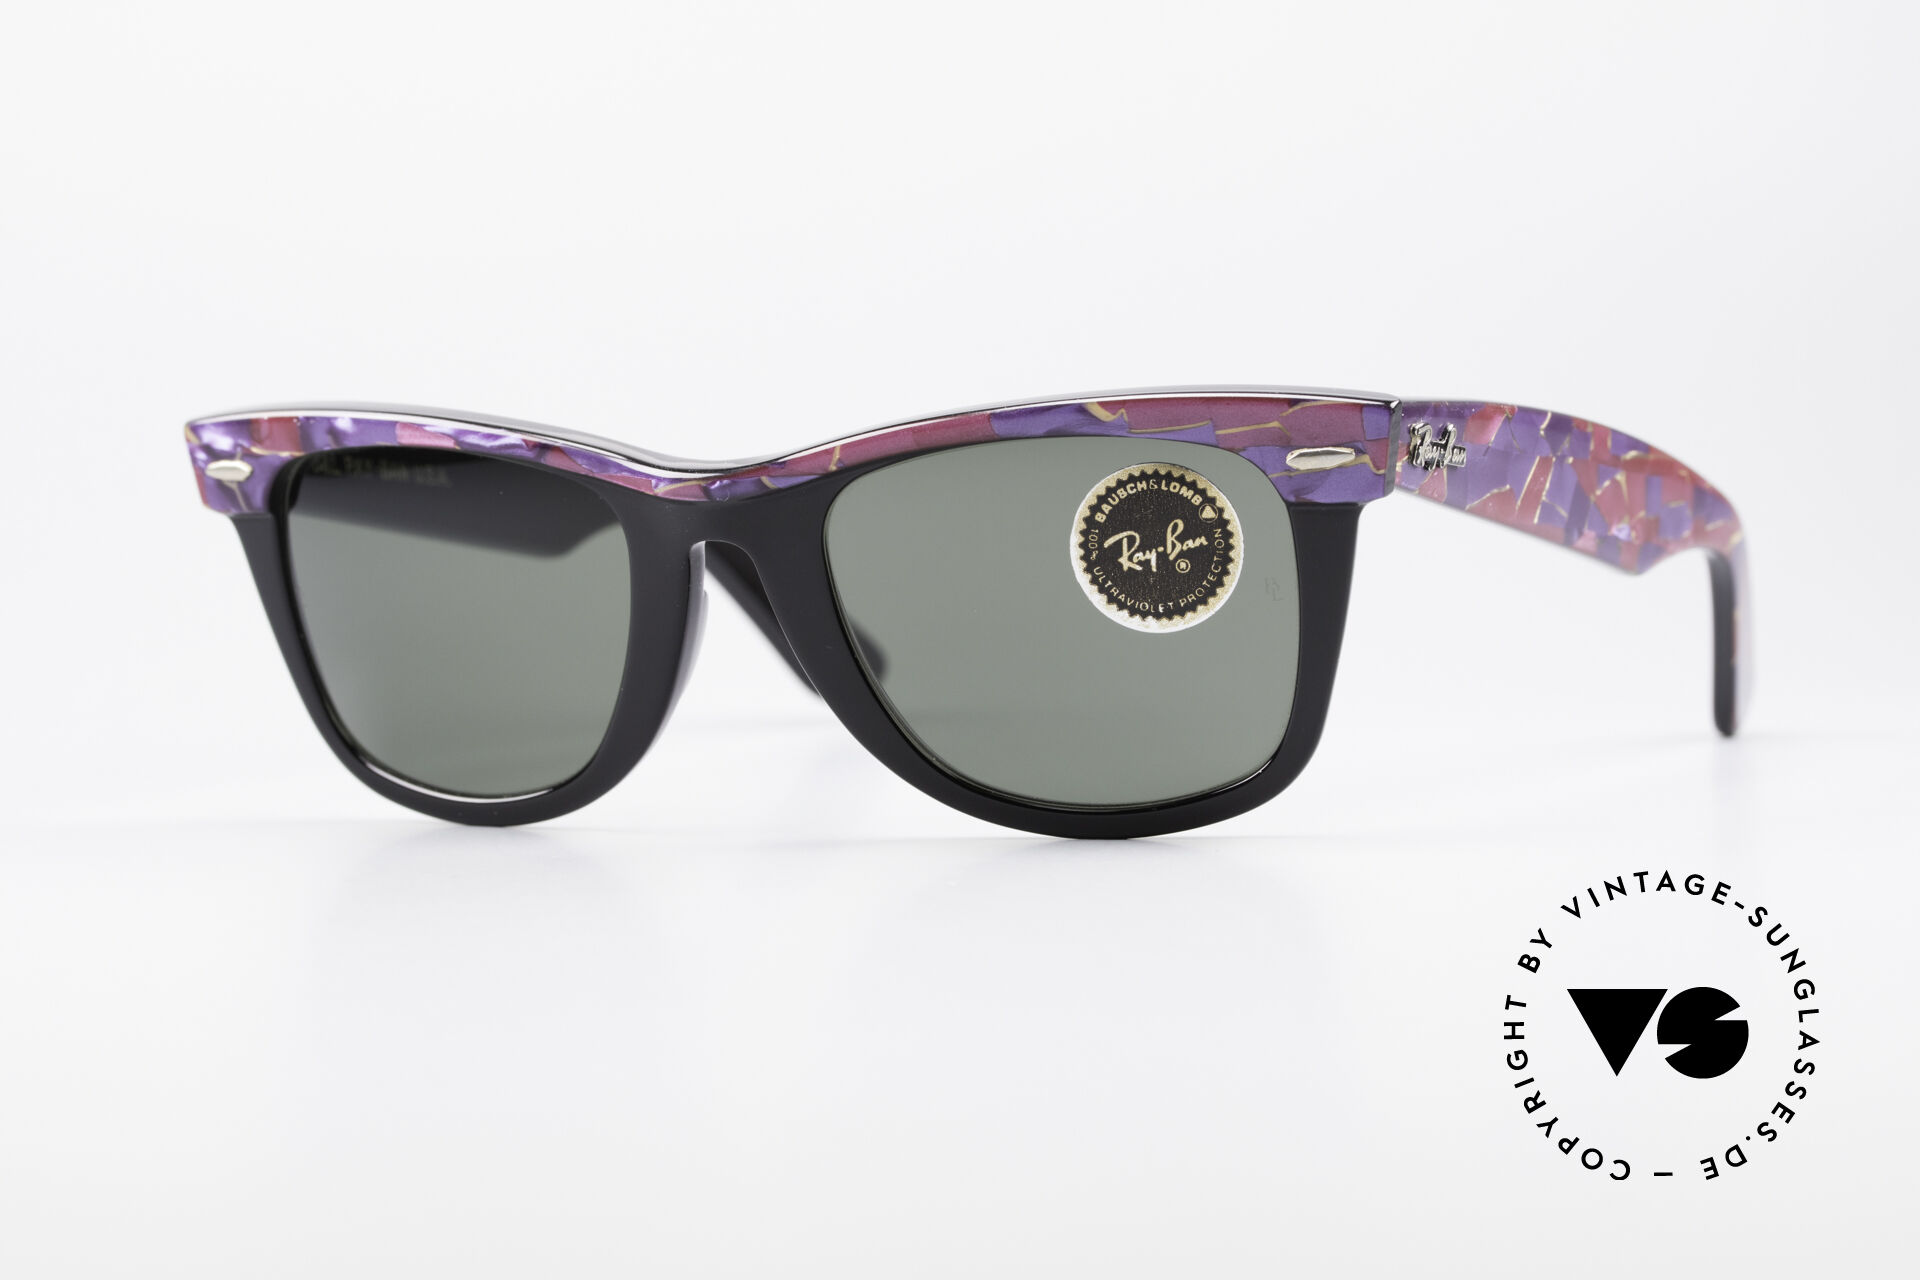 Madeliefje Bijlage Junior Sunglasses Ray Ban Wayfarer I Original Mosaic Wayfarer B&L